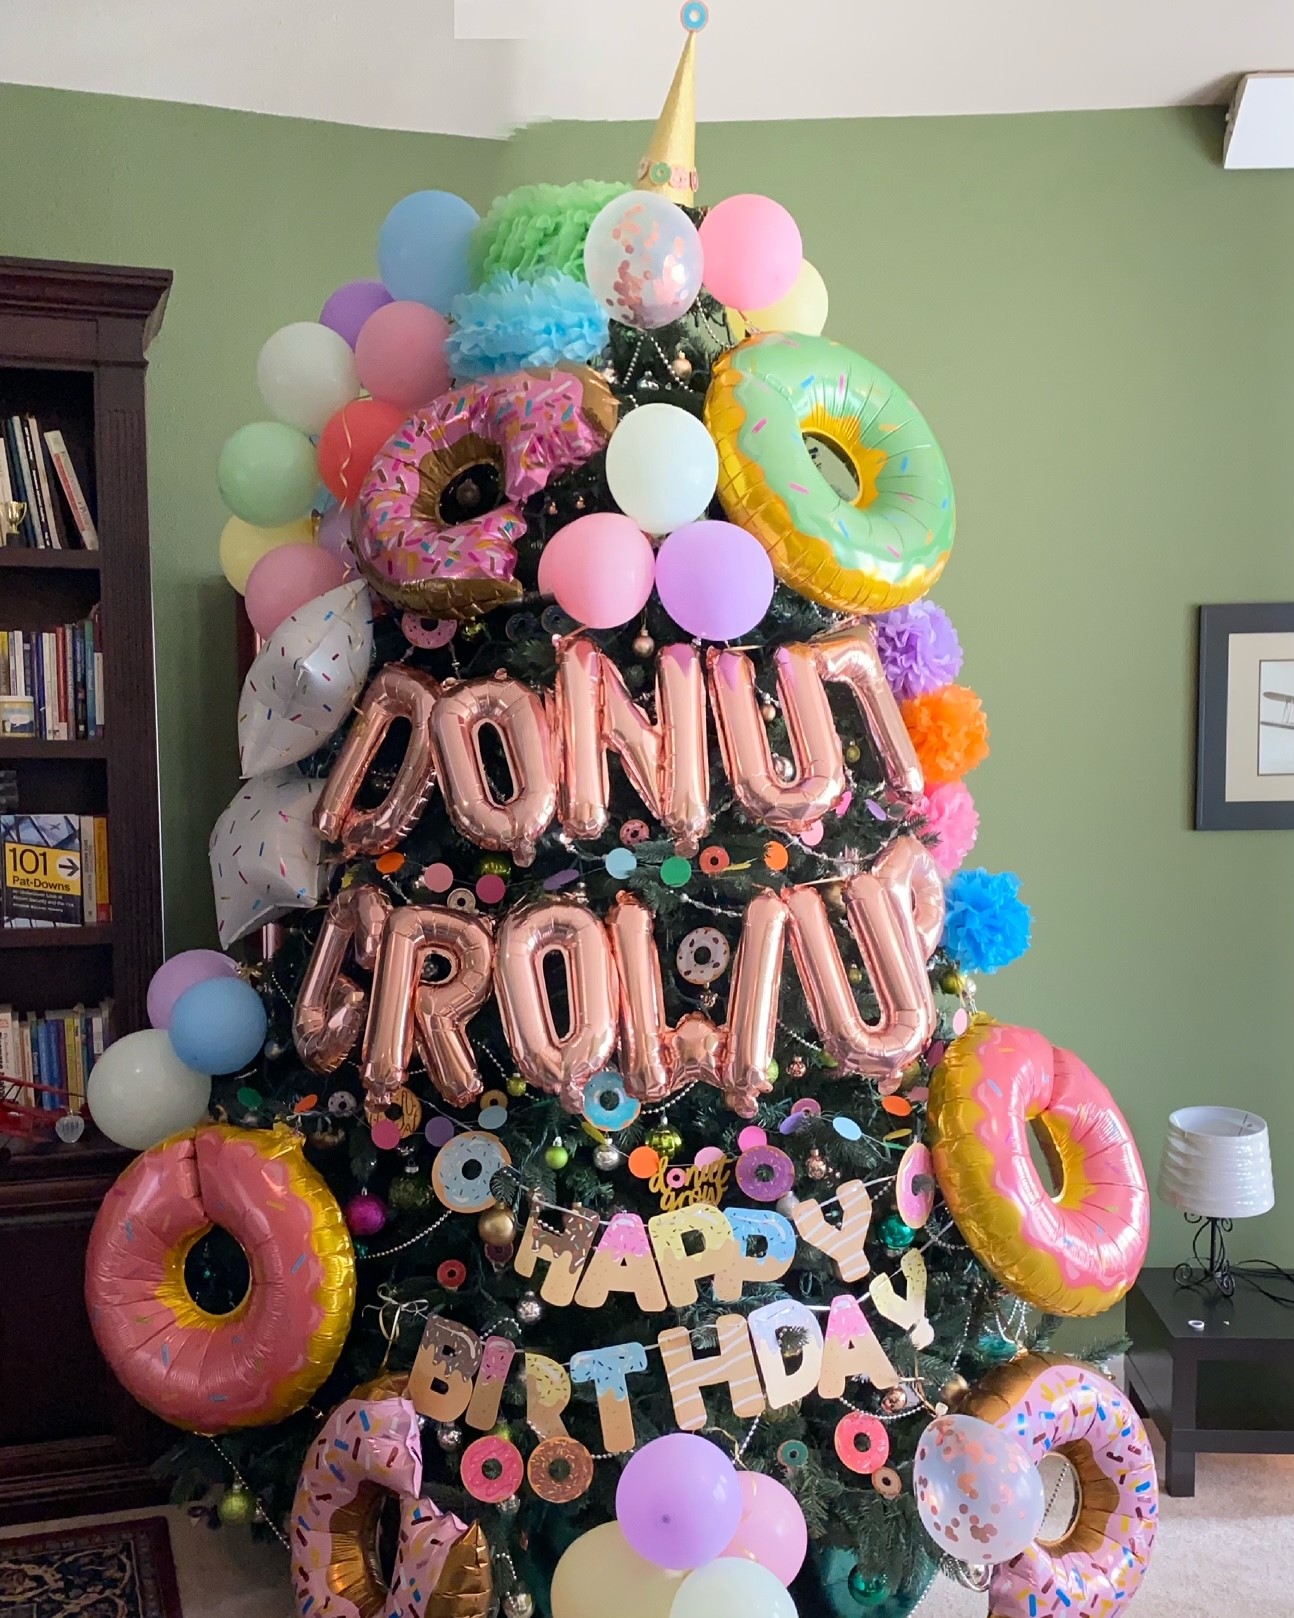 Happy National Donut Day!